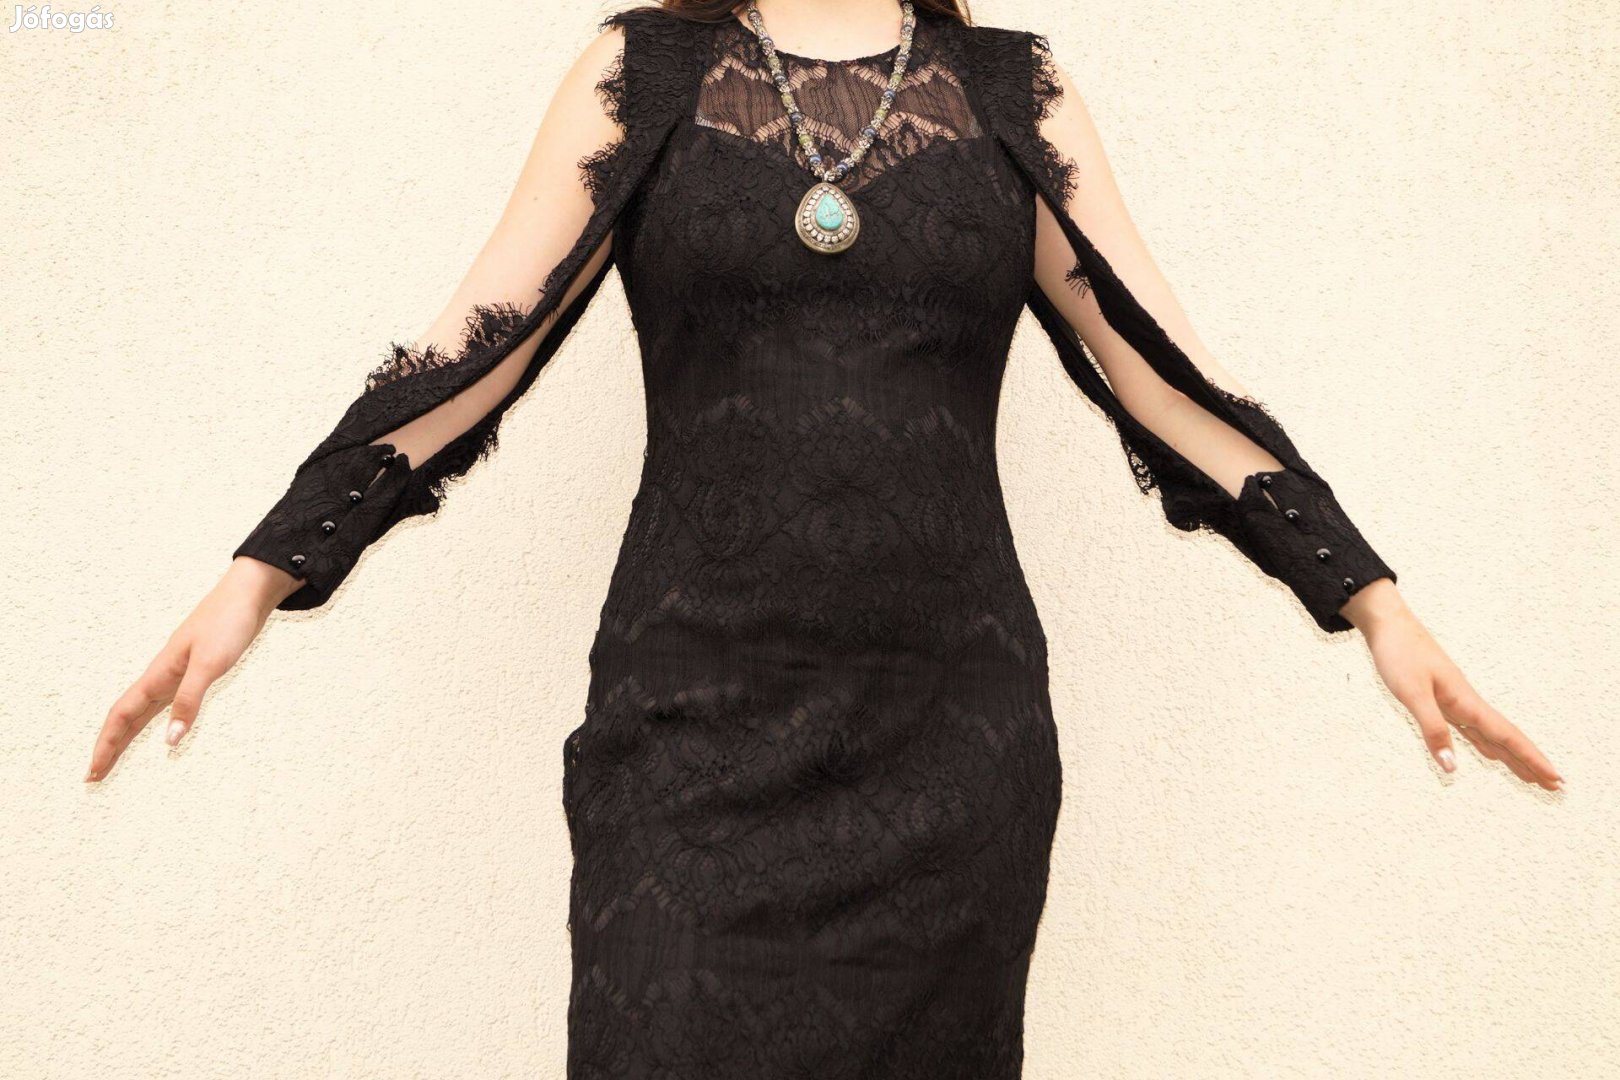 Fekete elasztikus új csipke ruha, alkalmi estélyi női csipke ruha, 38